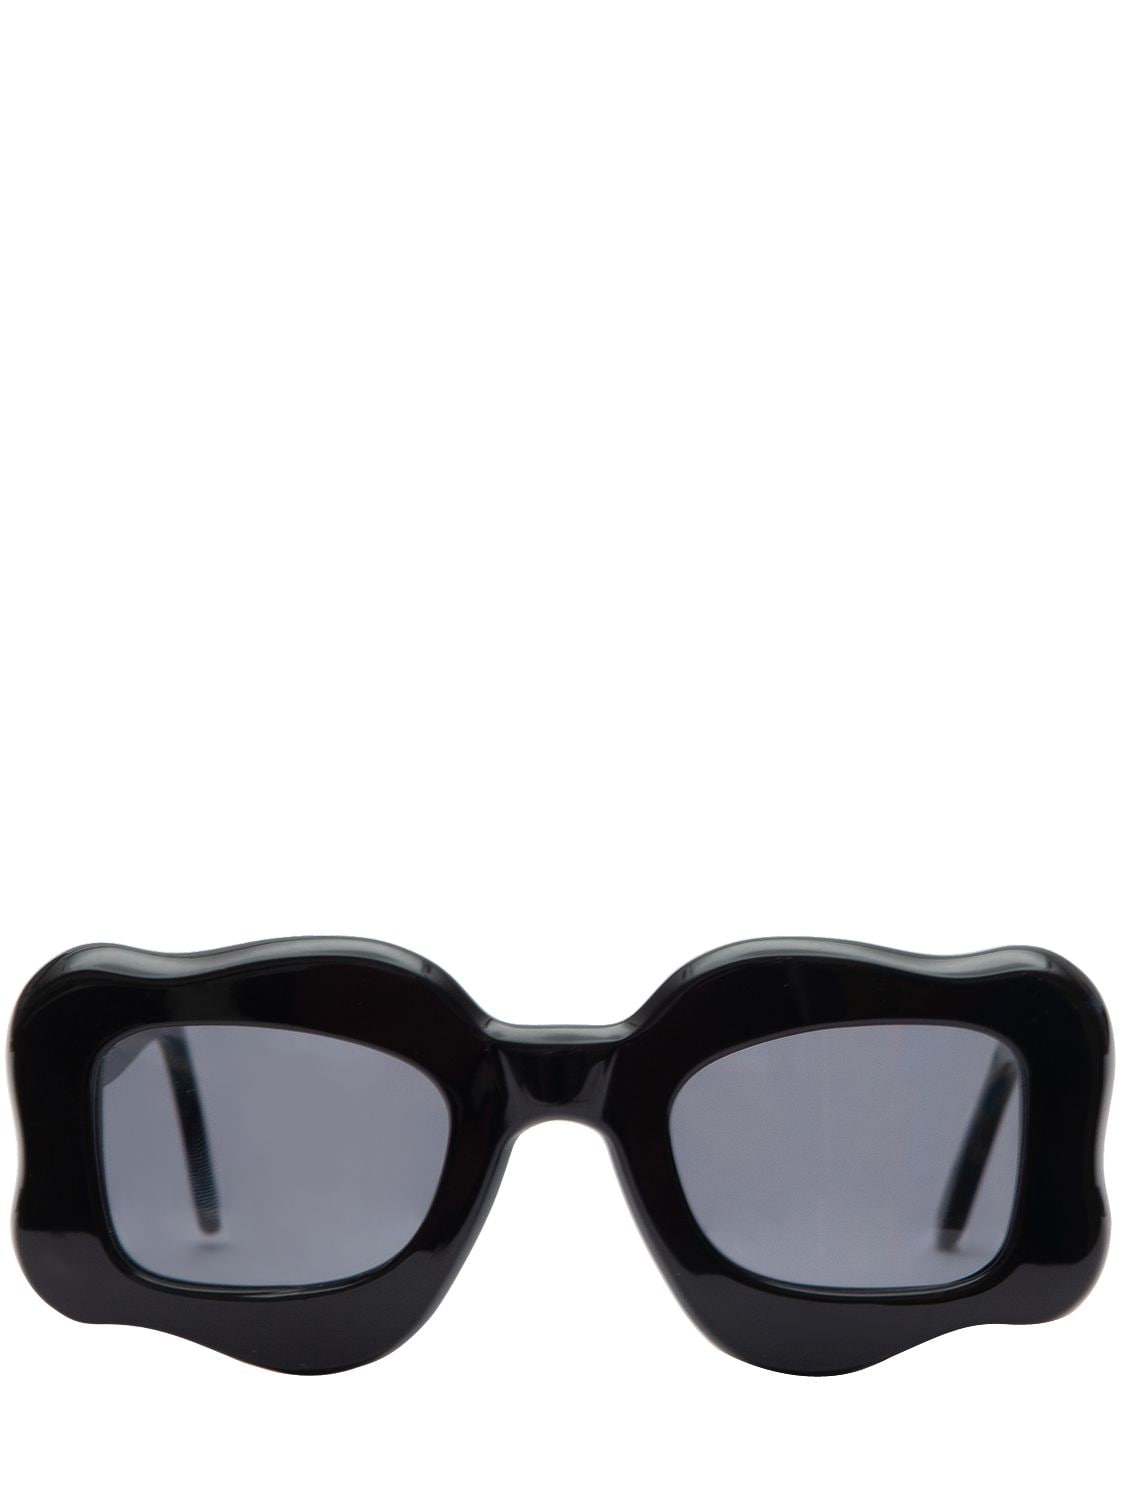 Shop Bonsai Sunglasses In Black